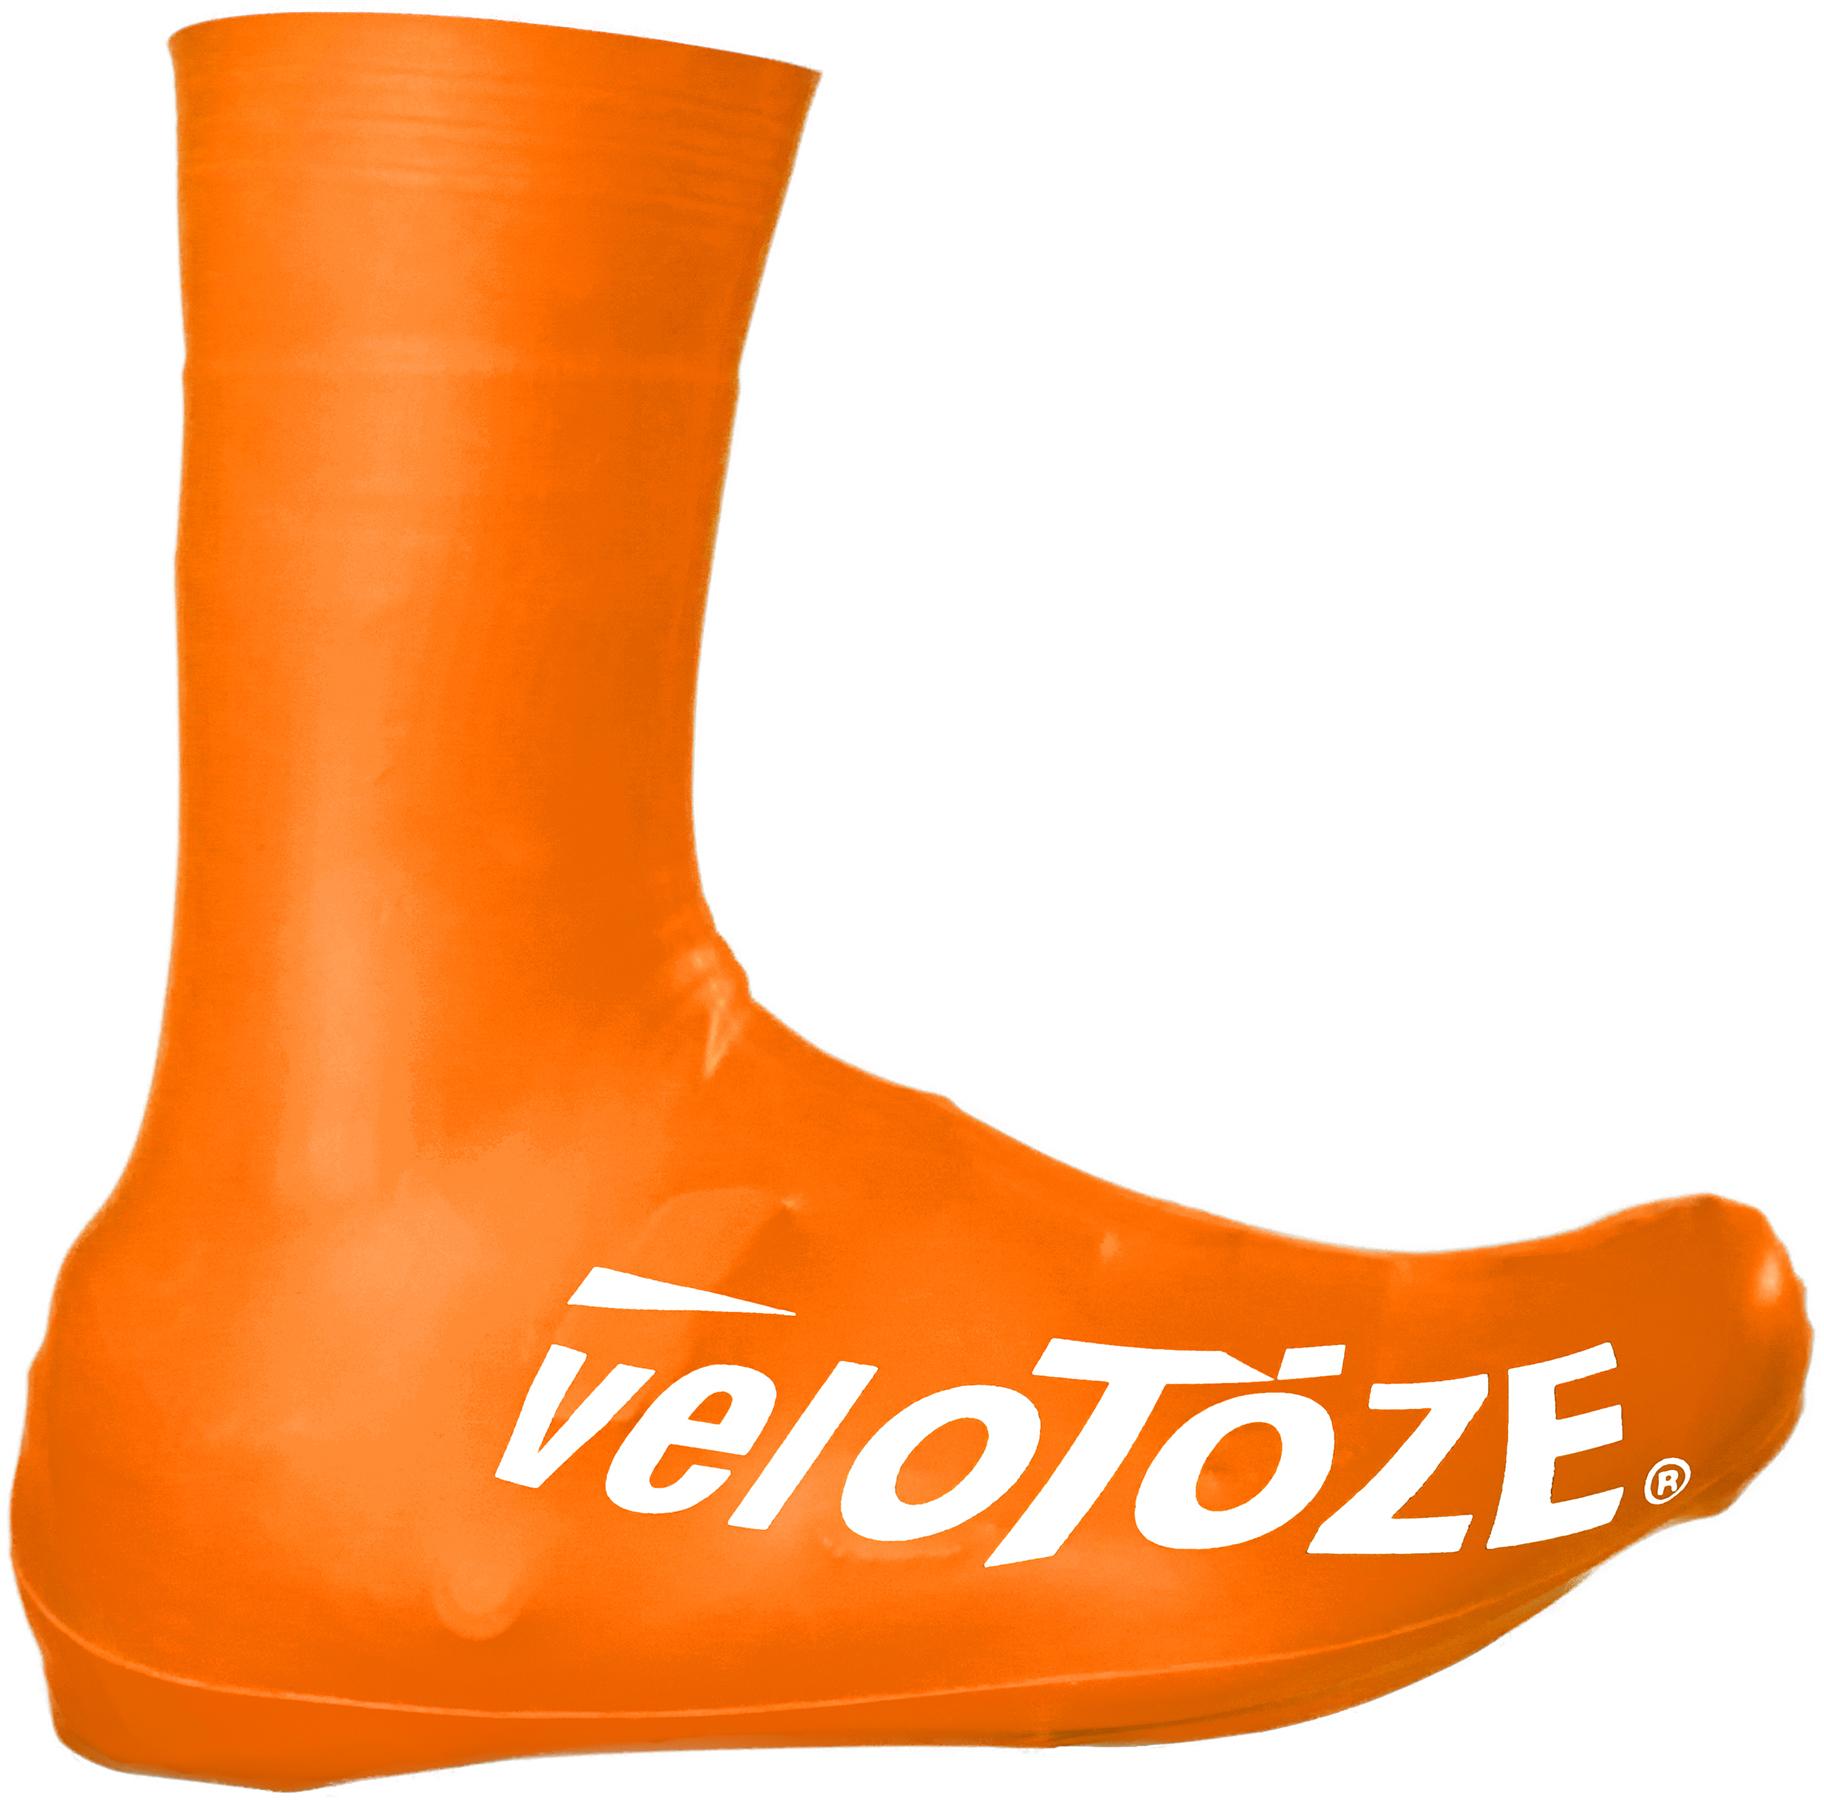 Velotoze Tall Shoe Covers 2.0 - Orange